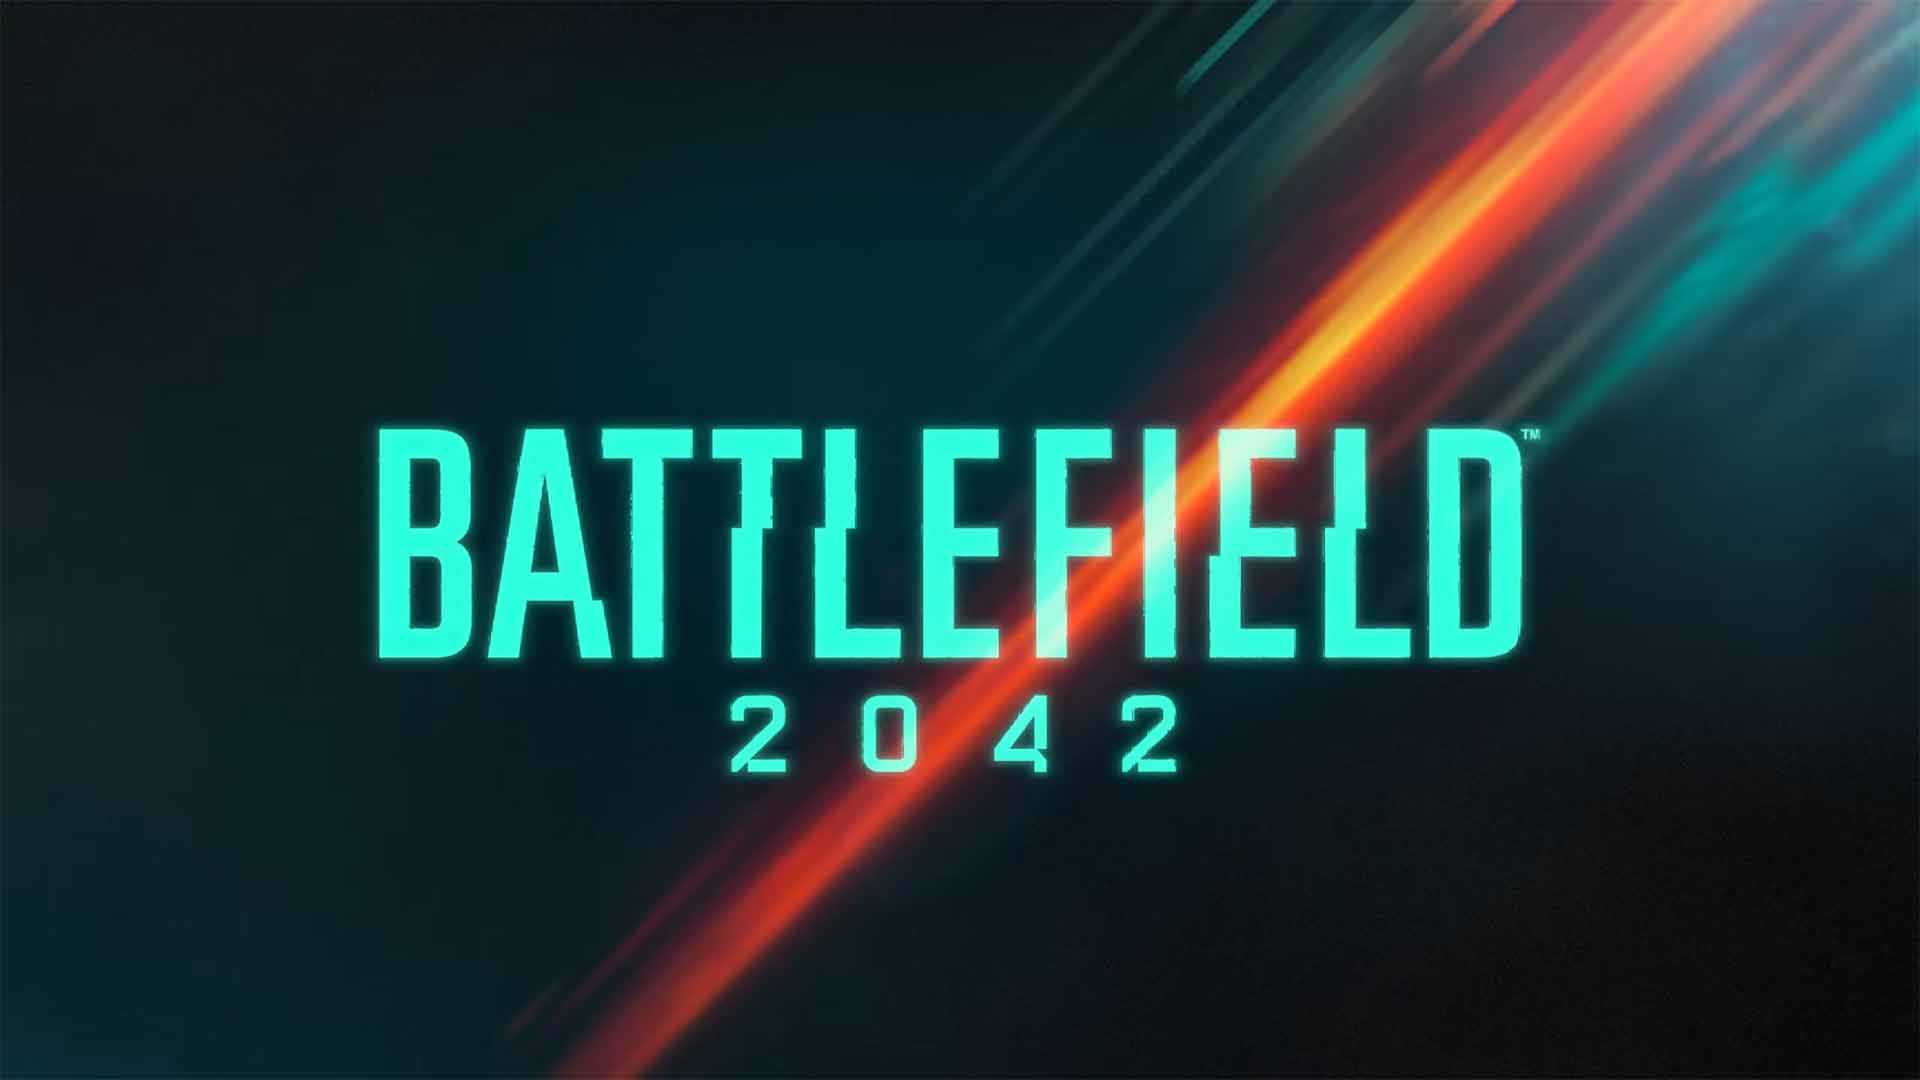 Battlefield 2042 Wallpapers - KoLPaPer - Awesome Free HD Wallpapers